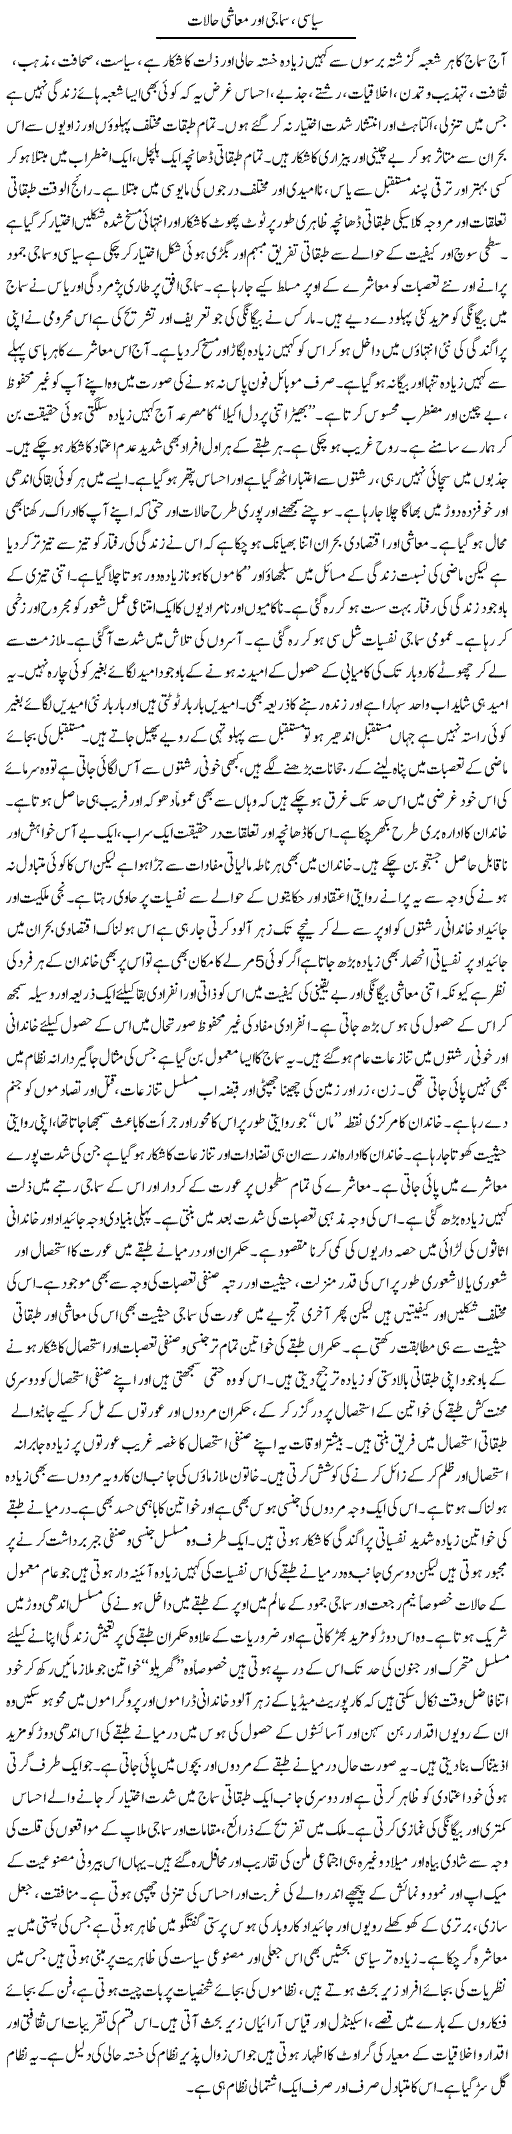 Siasi Samaji Aur Muashi Halaat | Zubair Rehman | Daily Urdu Columns